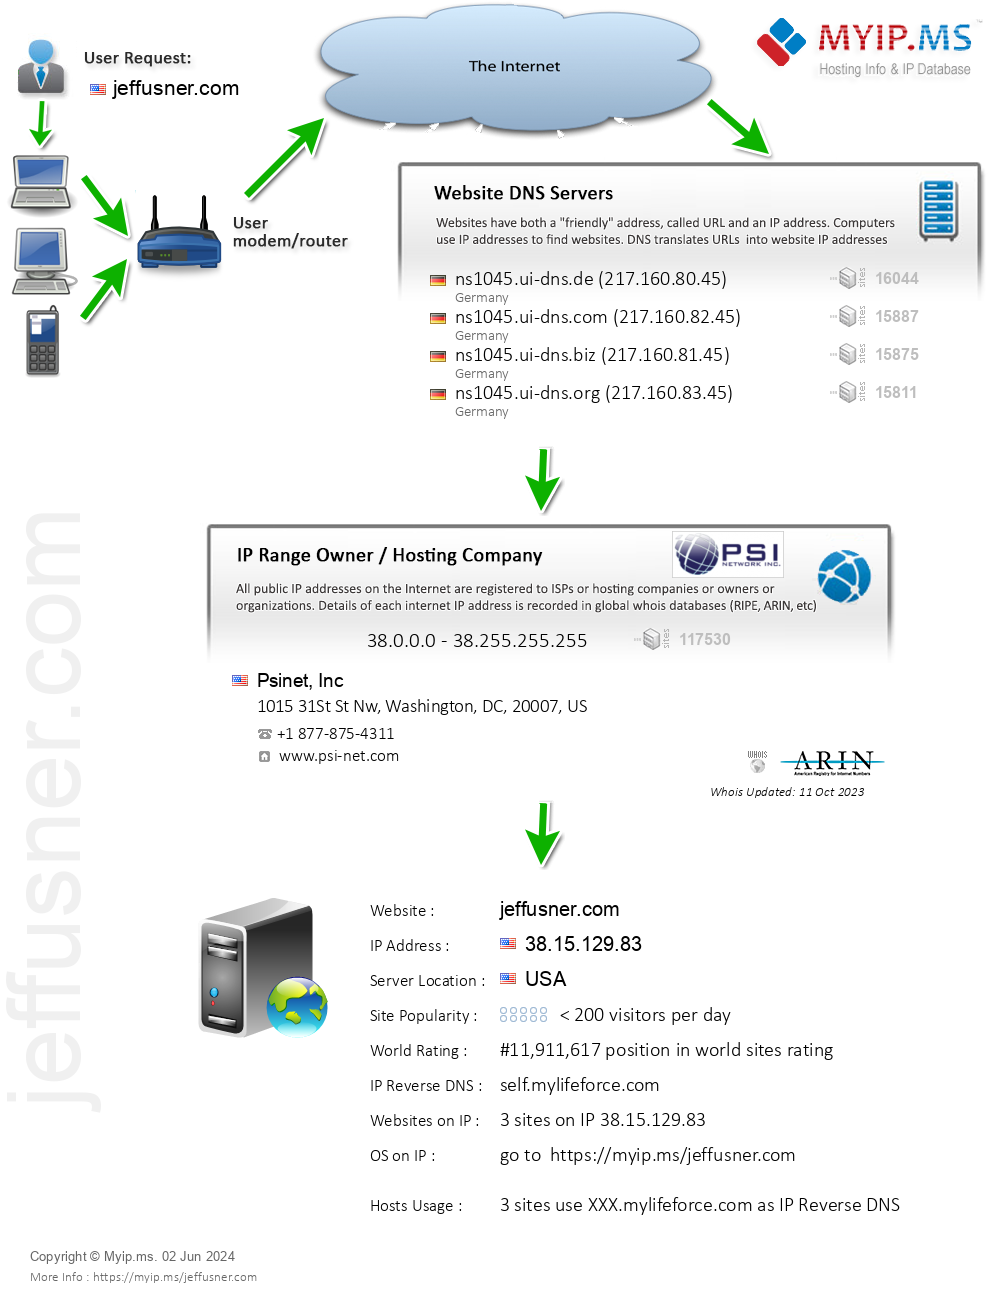 Jeffusner.com - Website Hosting Visual IP Diagram